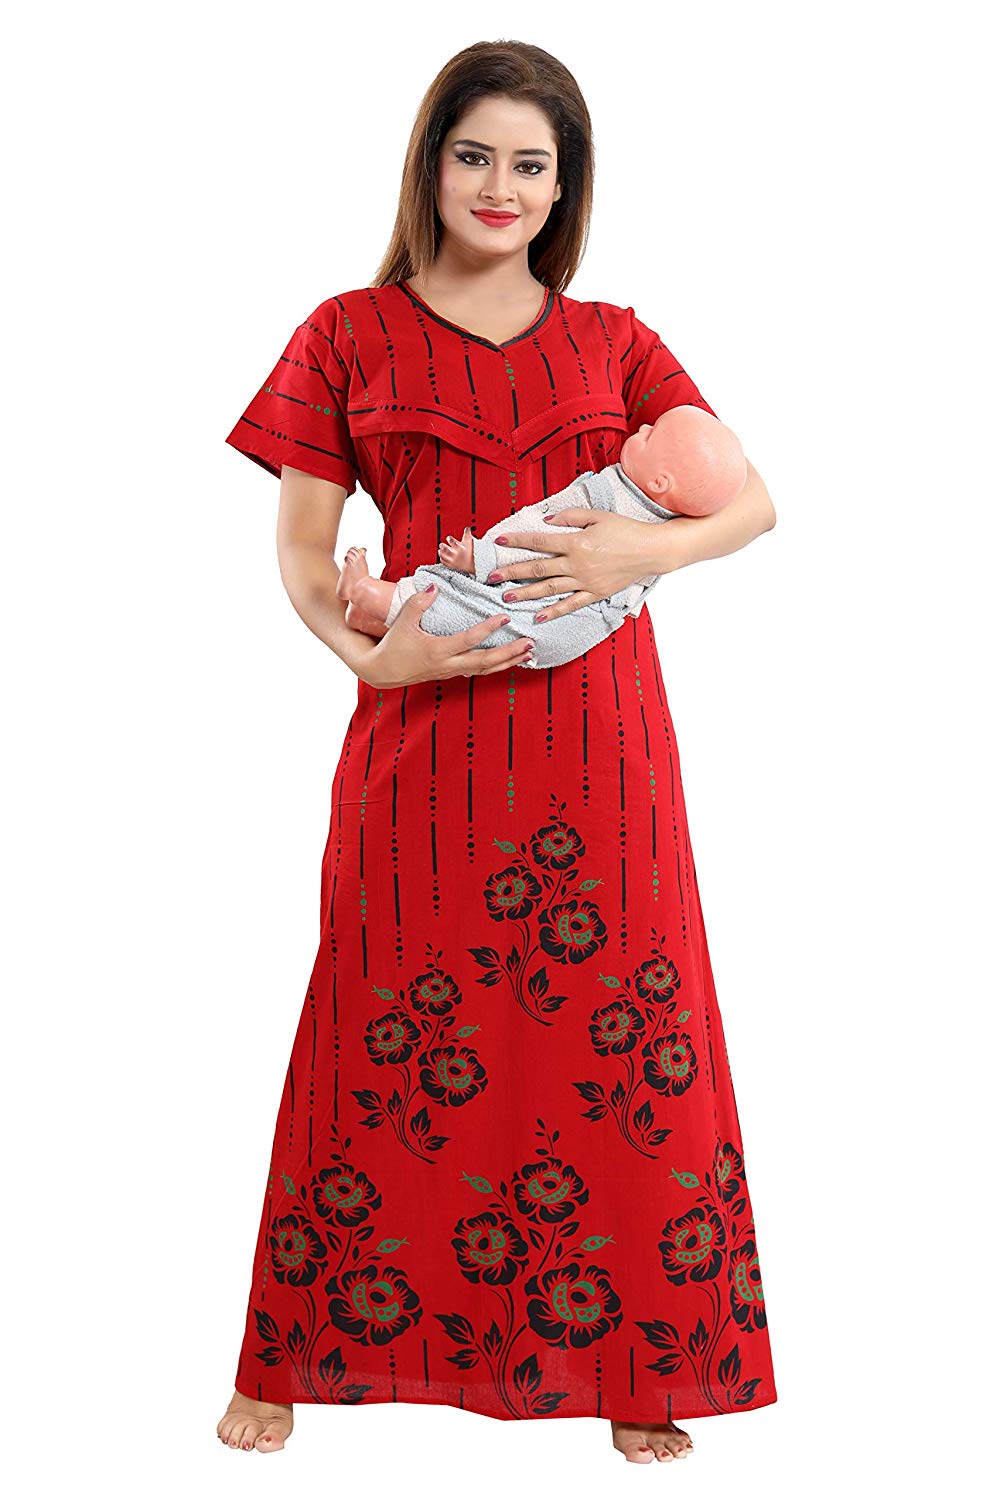 Women's Beautiful Print Cotton Fabric with V Pattern Feeding/Maternity/Nursing Nighty/Nightwear.